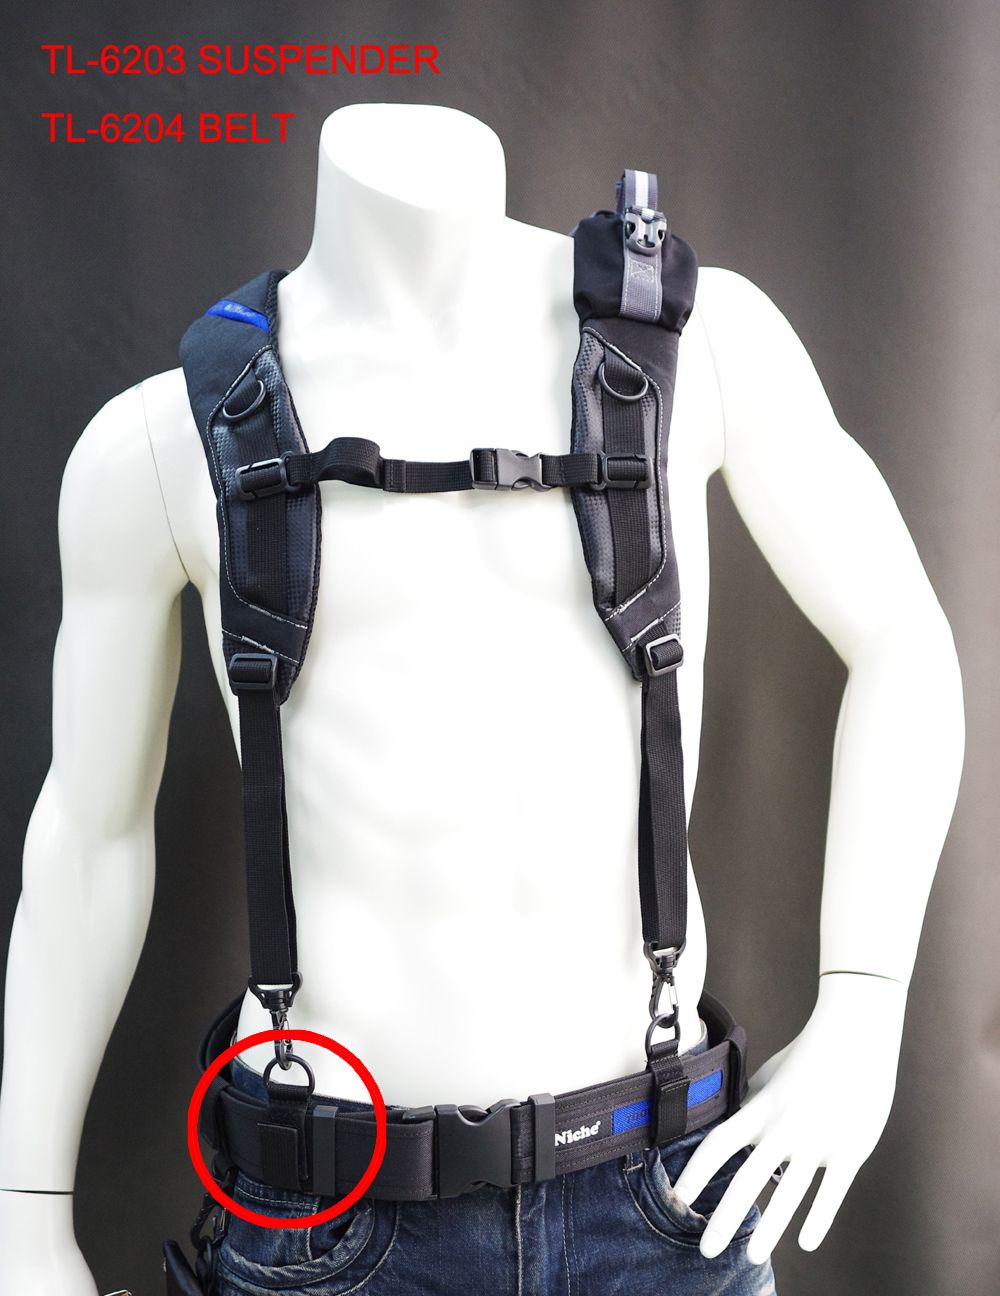  Combine usage with Suspender Rig